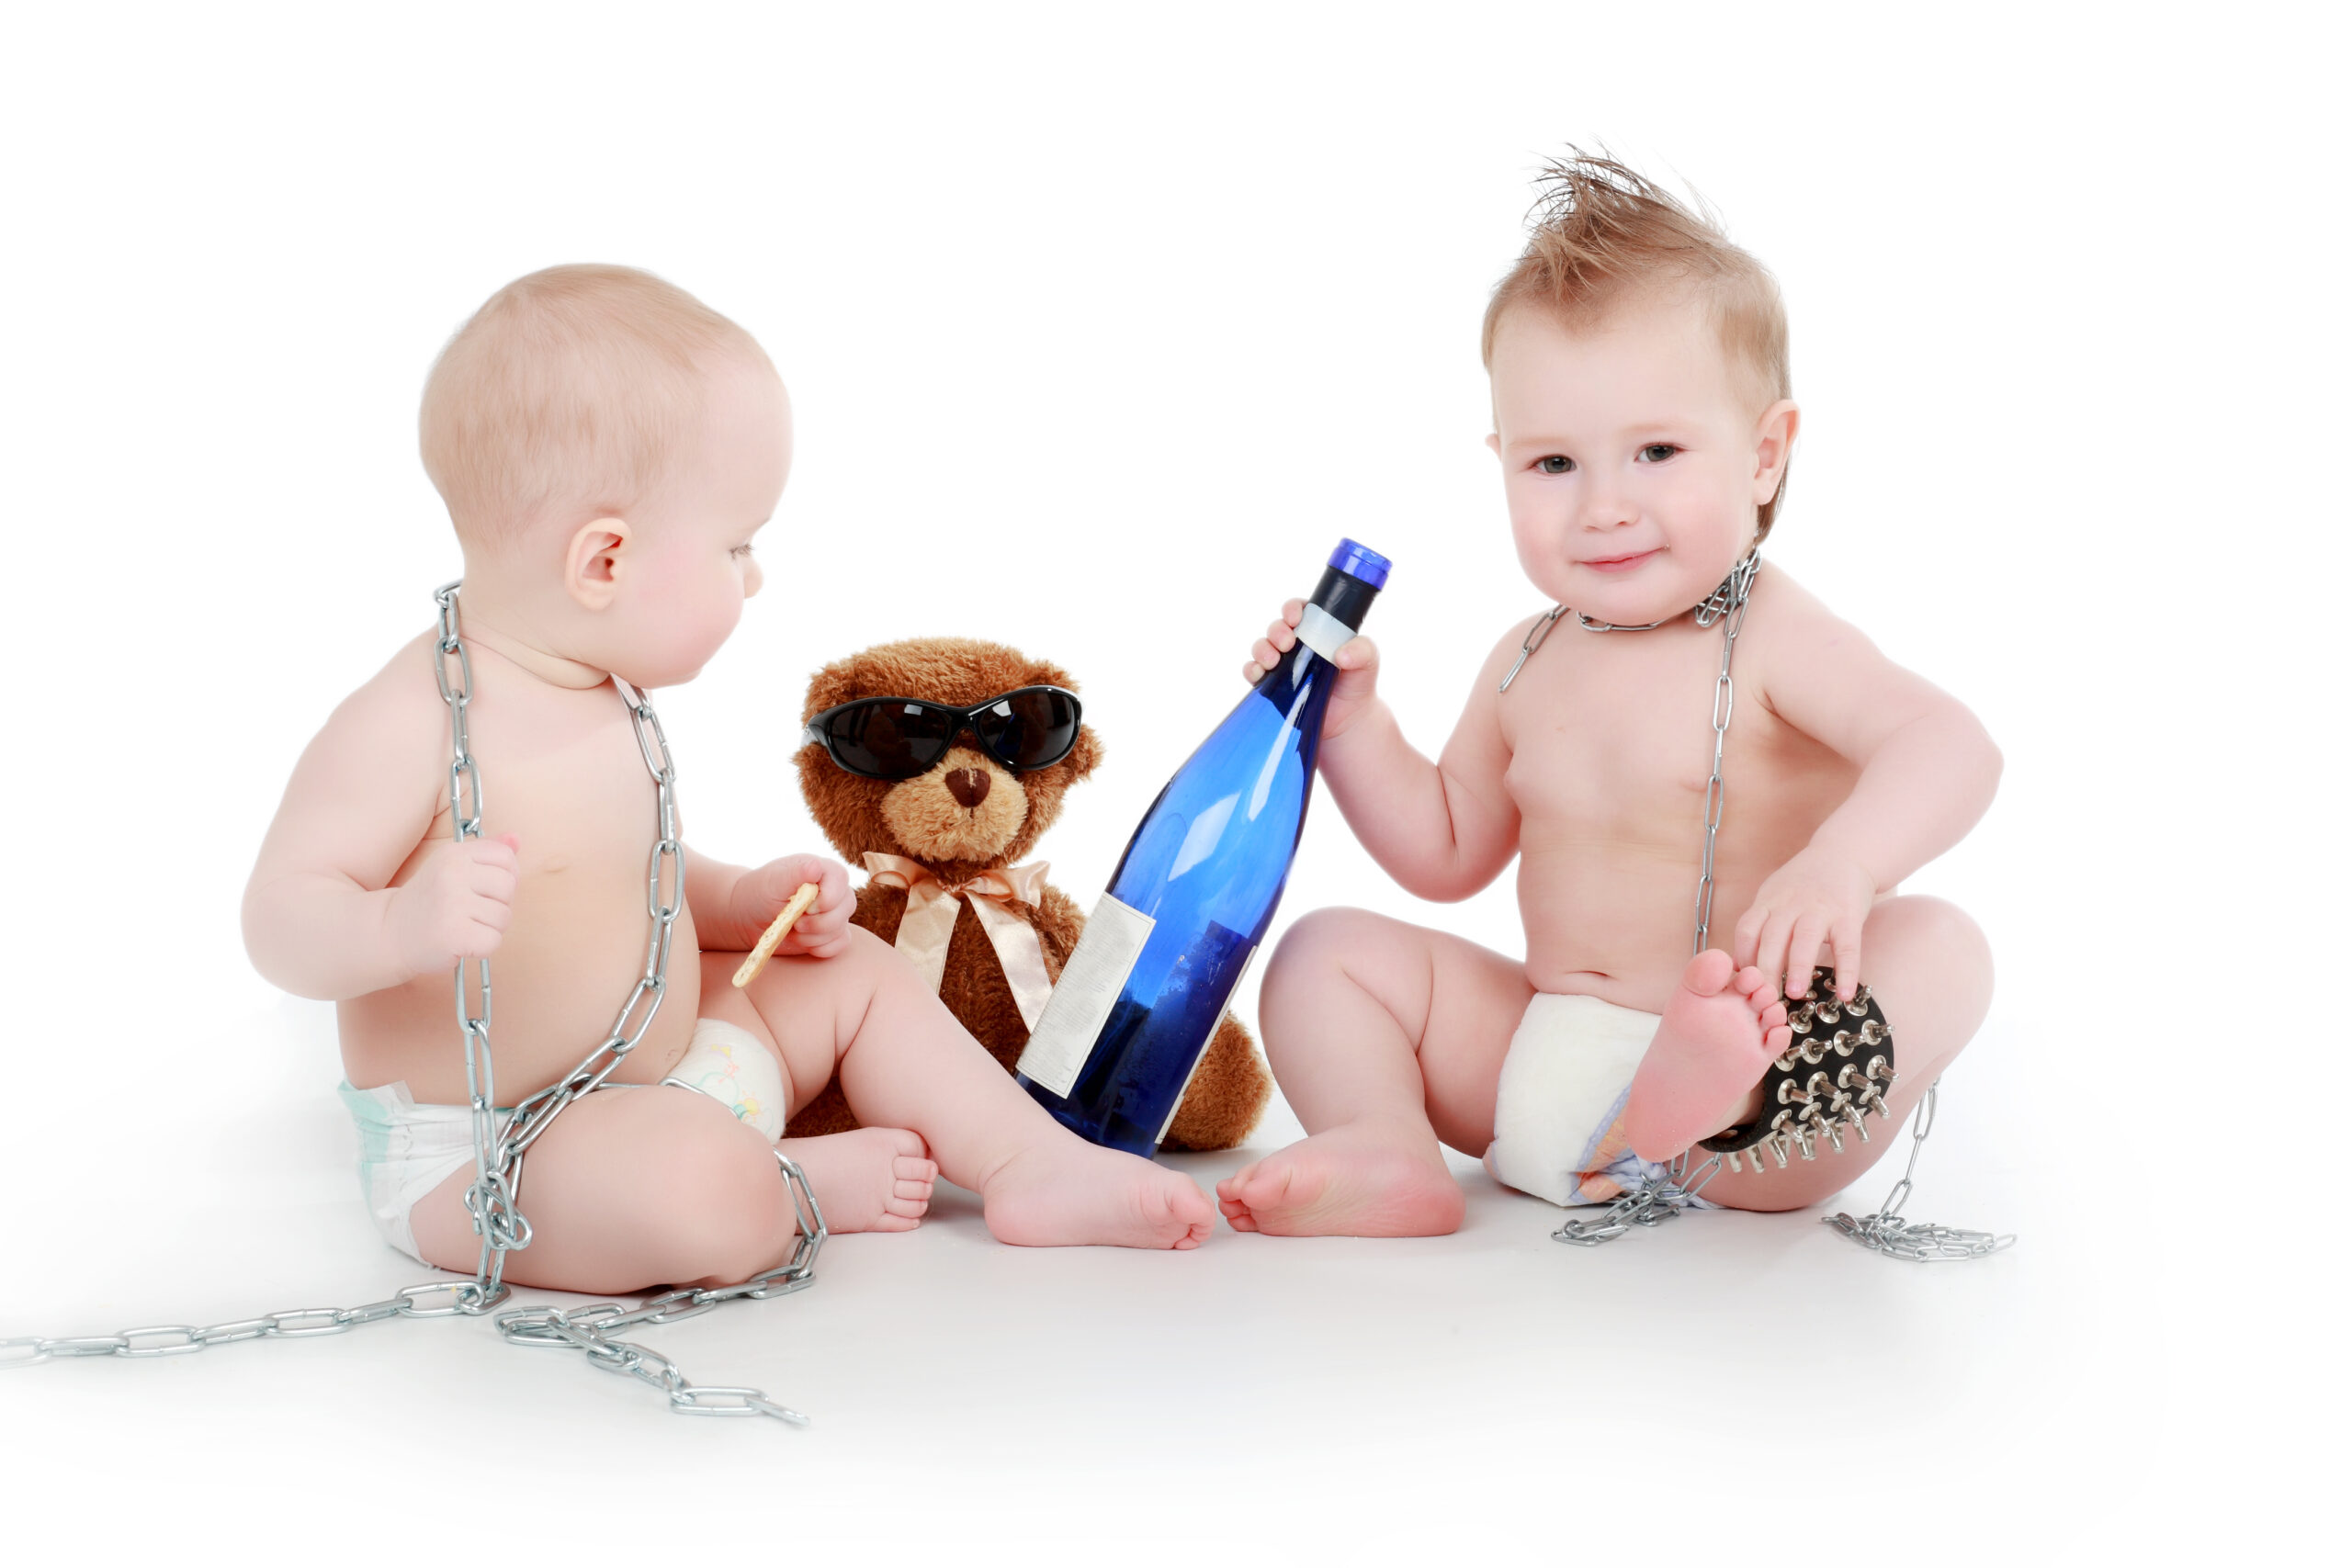 Breastfeeding moms can drink responsibly